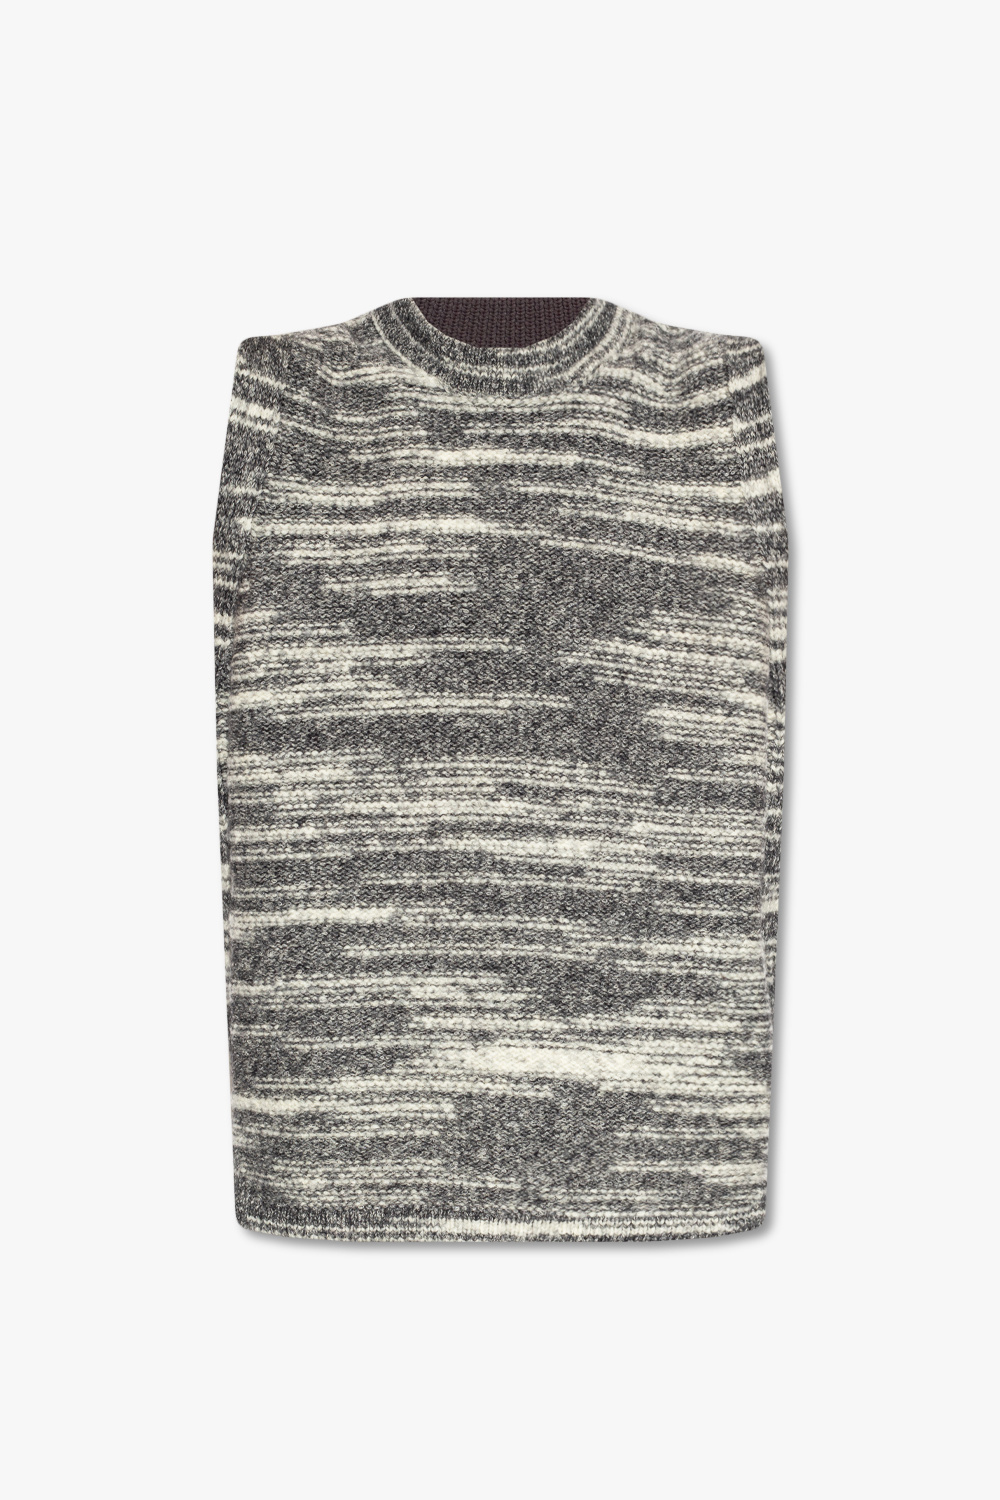 Stone Island Sleeveless sweater